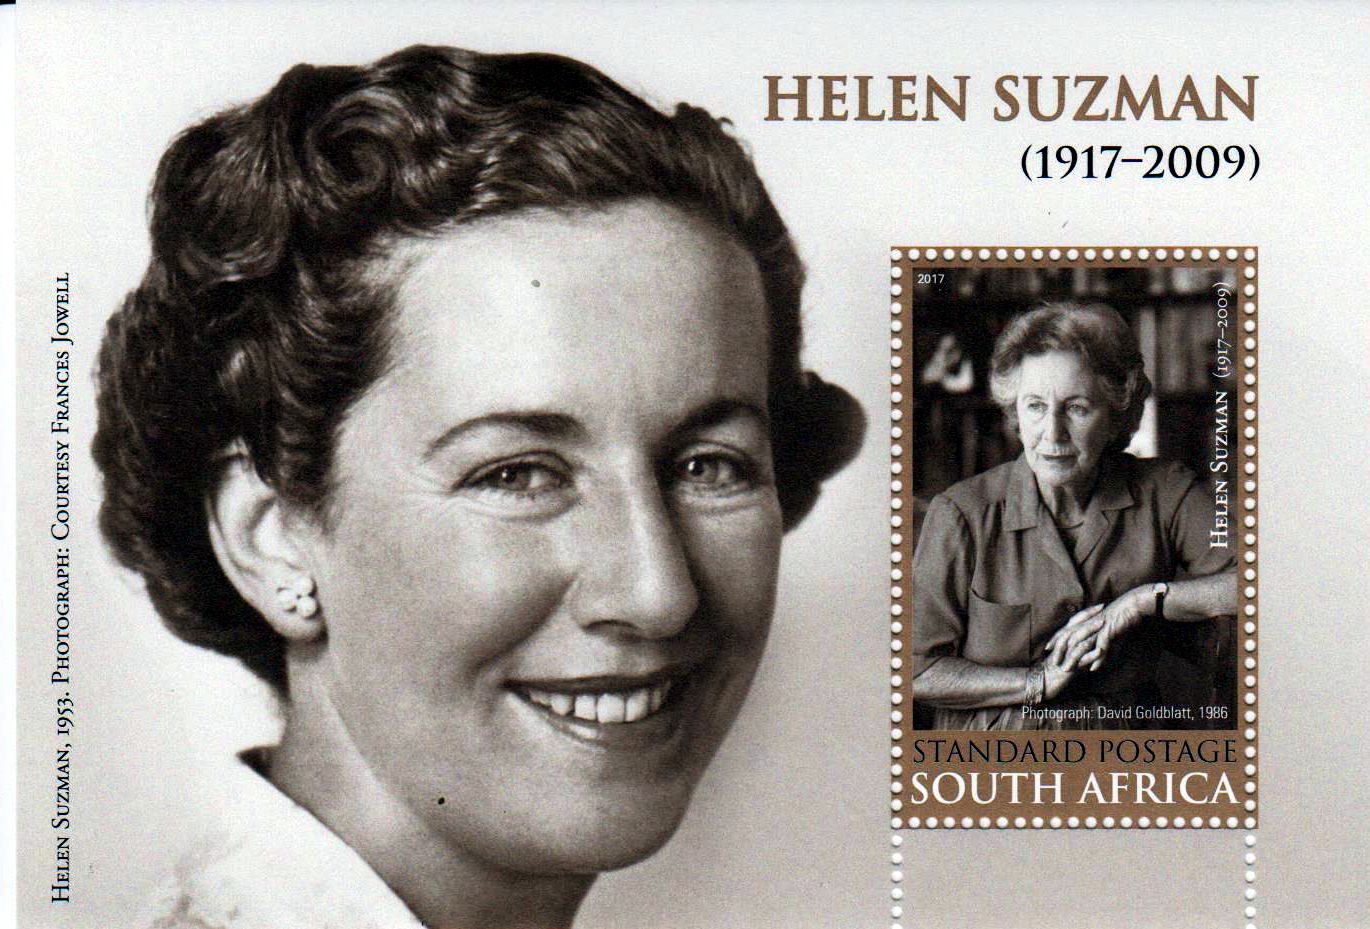 Block: Helen Suzman, Politikerin